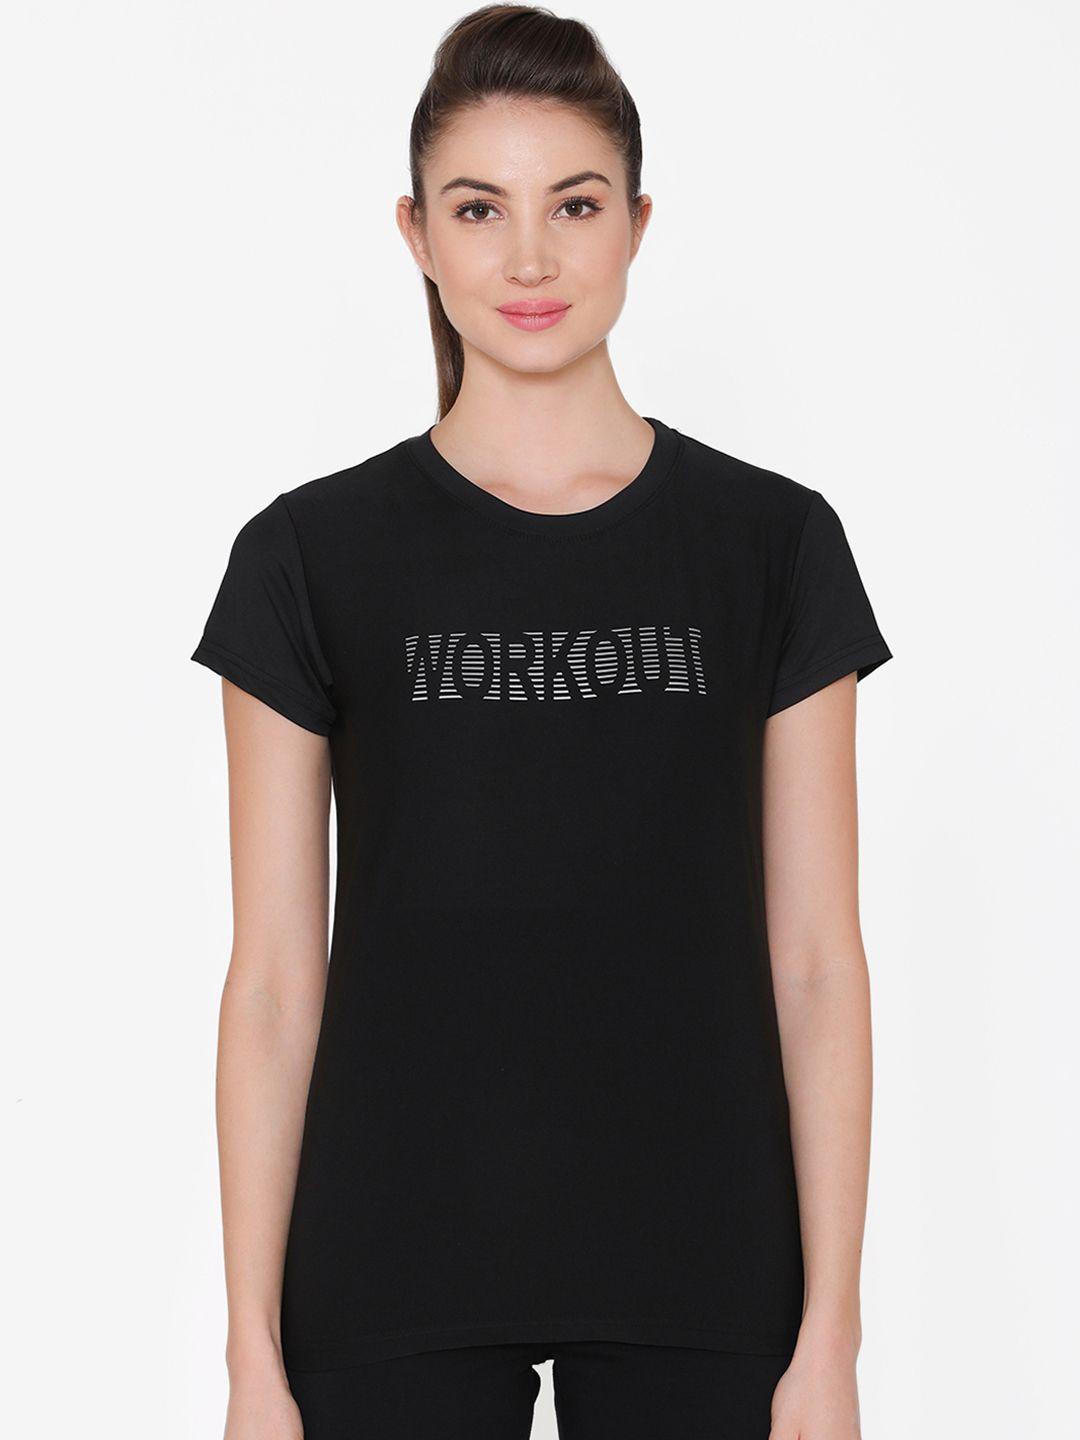 clovia women black printed round neck t-shirt